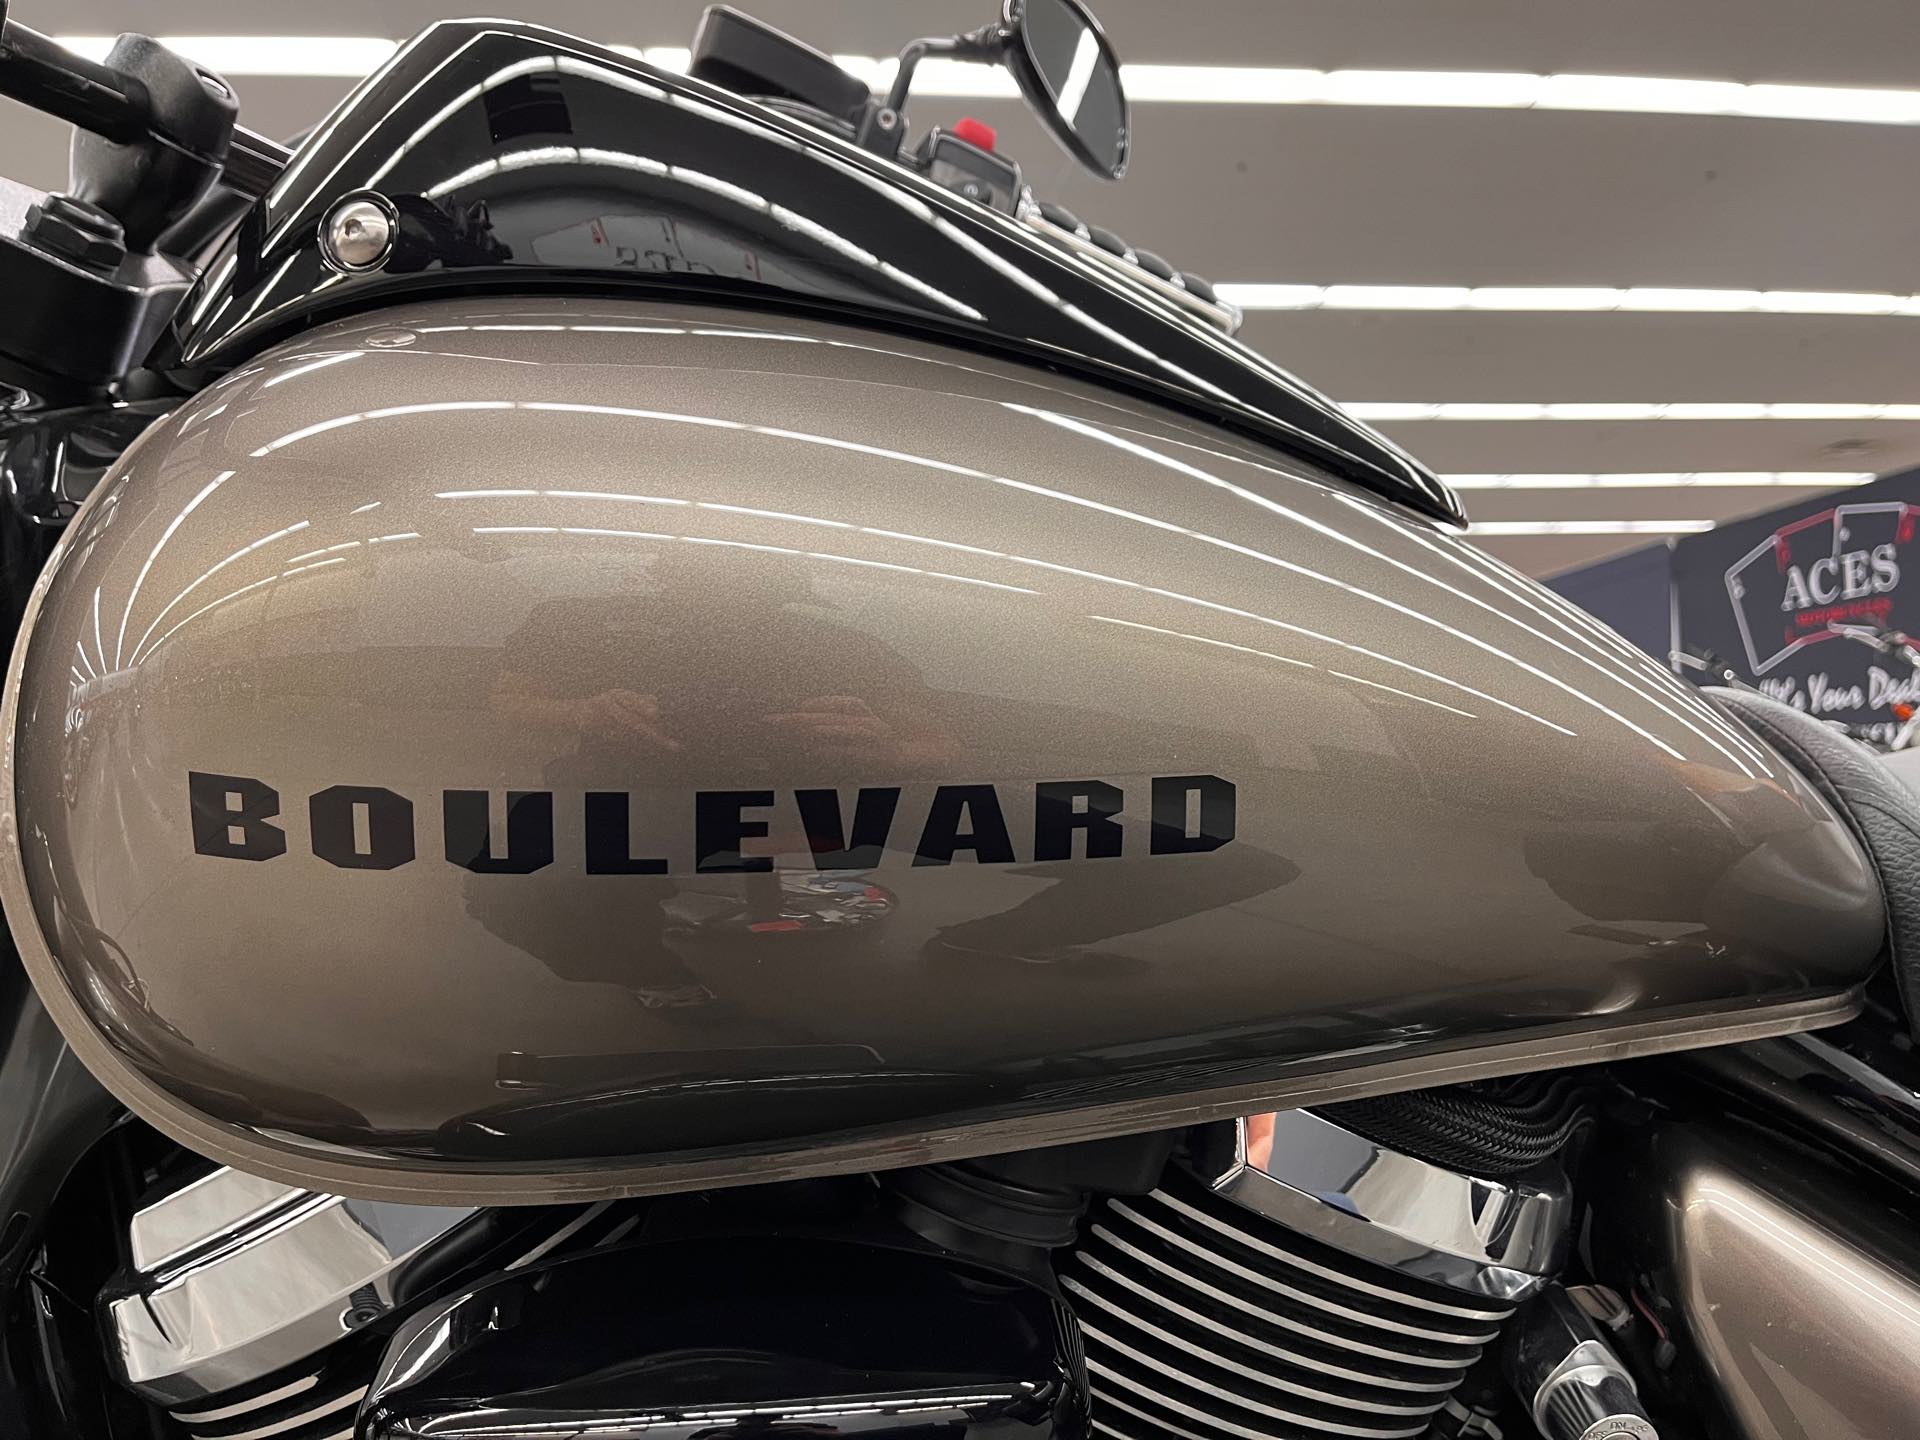 2019 Suzuki Boulevard C90 B.O.S.S. at Aces Motorcycles - Denver